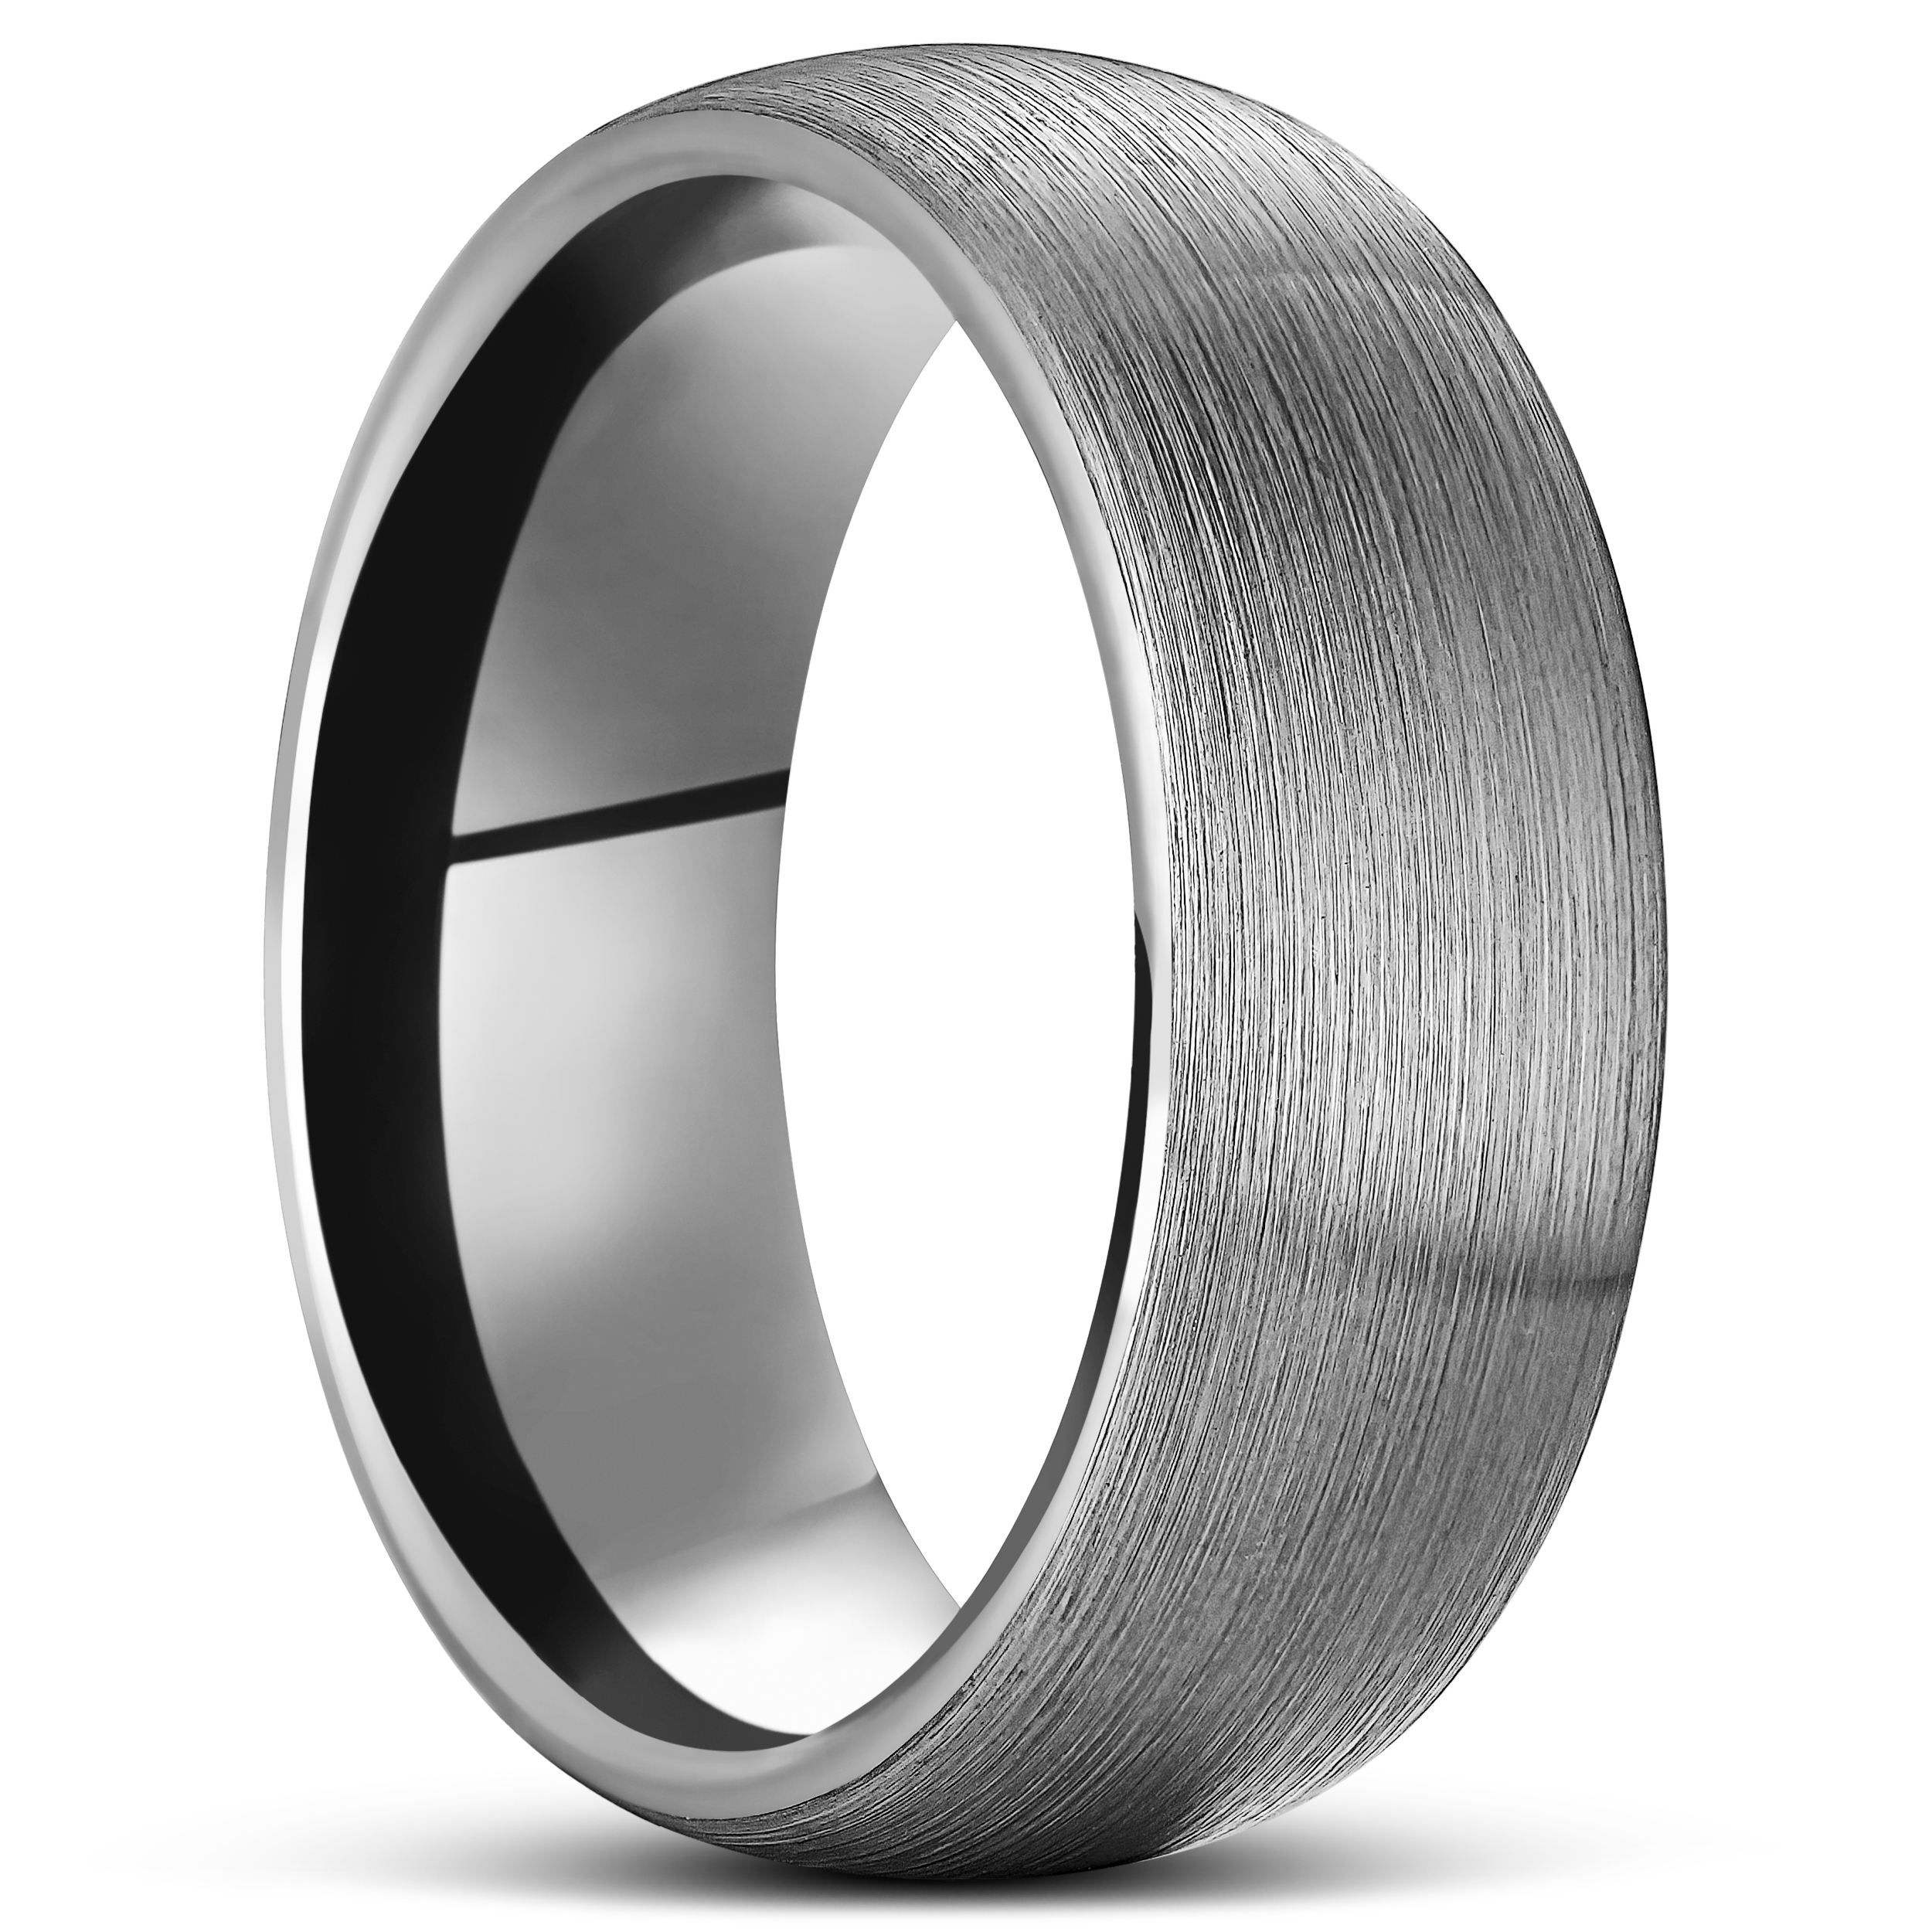 Brushed Gun Metal Ring – The Bold Ring Company